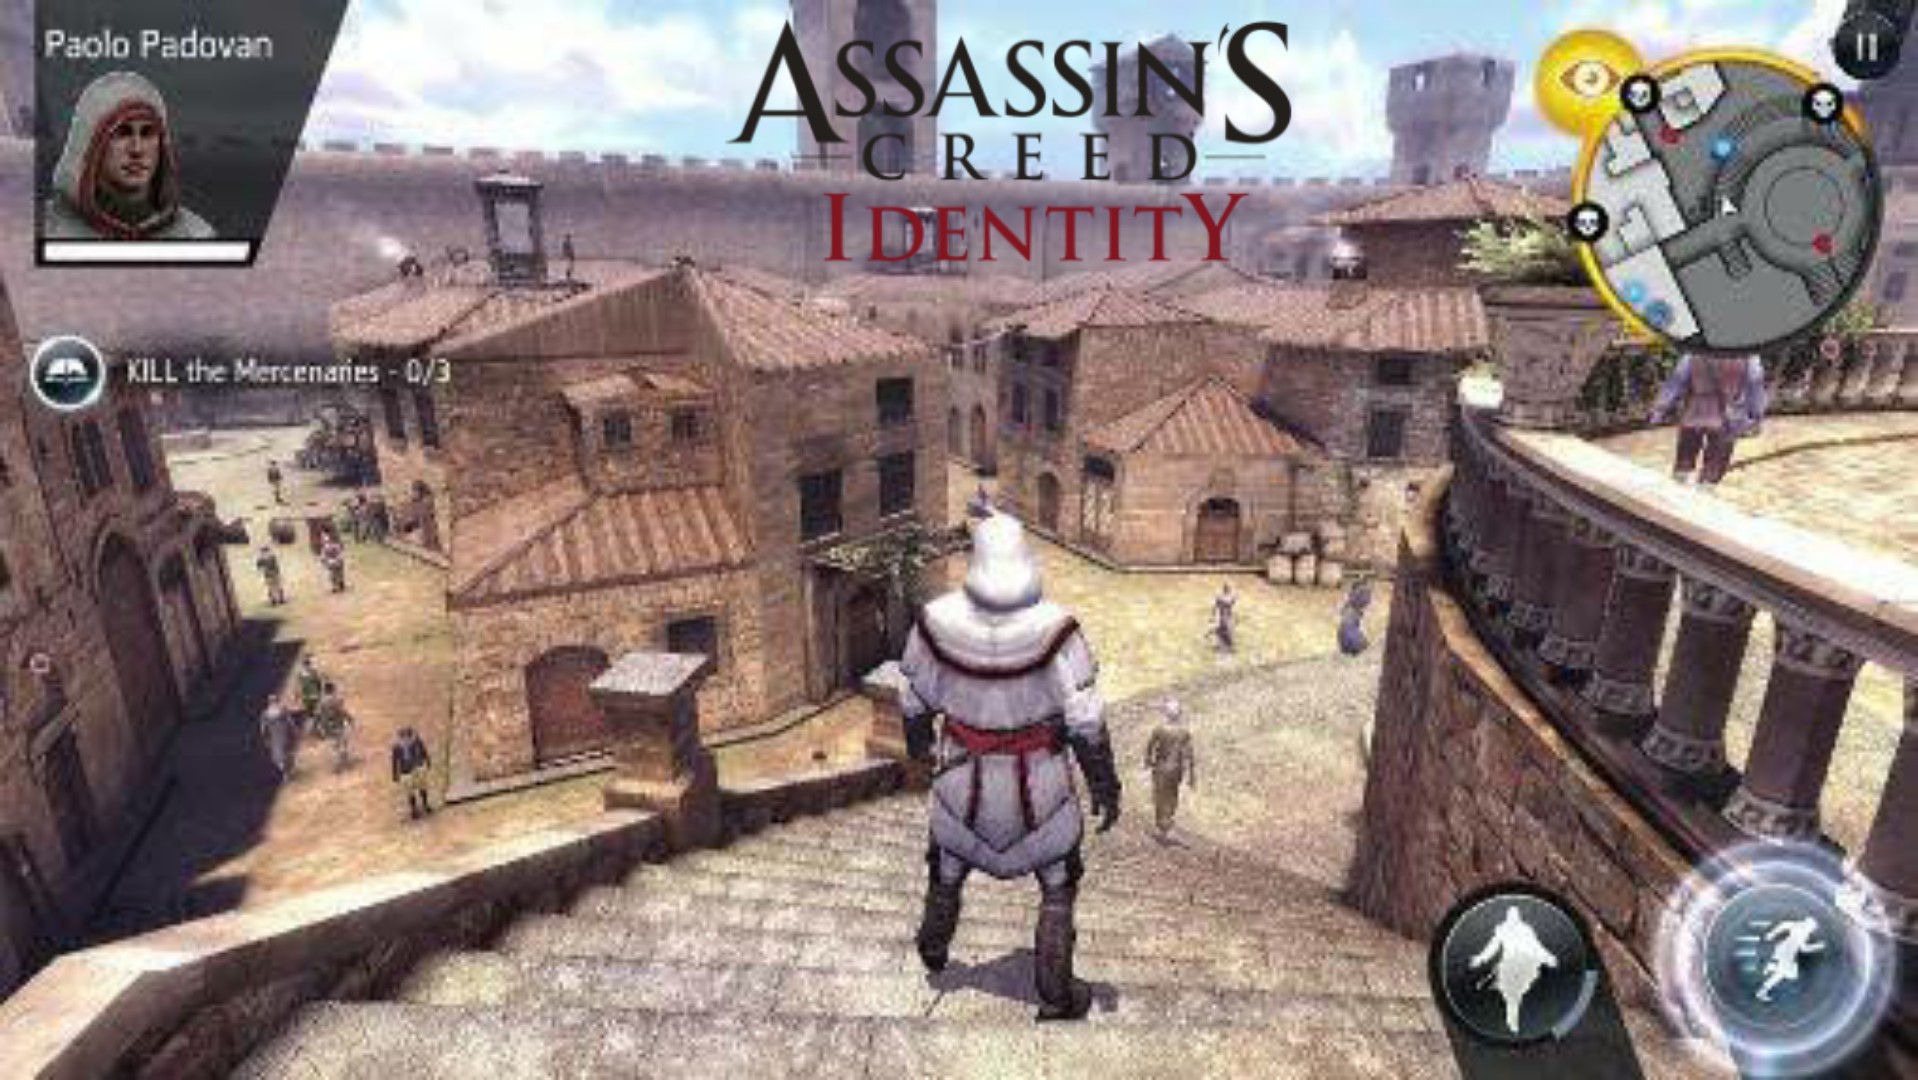 Creed похожие игры. Assassins Creed 1.1.2-Android. Assassin’s Creed Identity (идентификация). Assassin's Creed Multiplayer на андроид. Ассасин 1 скрины.